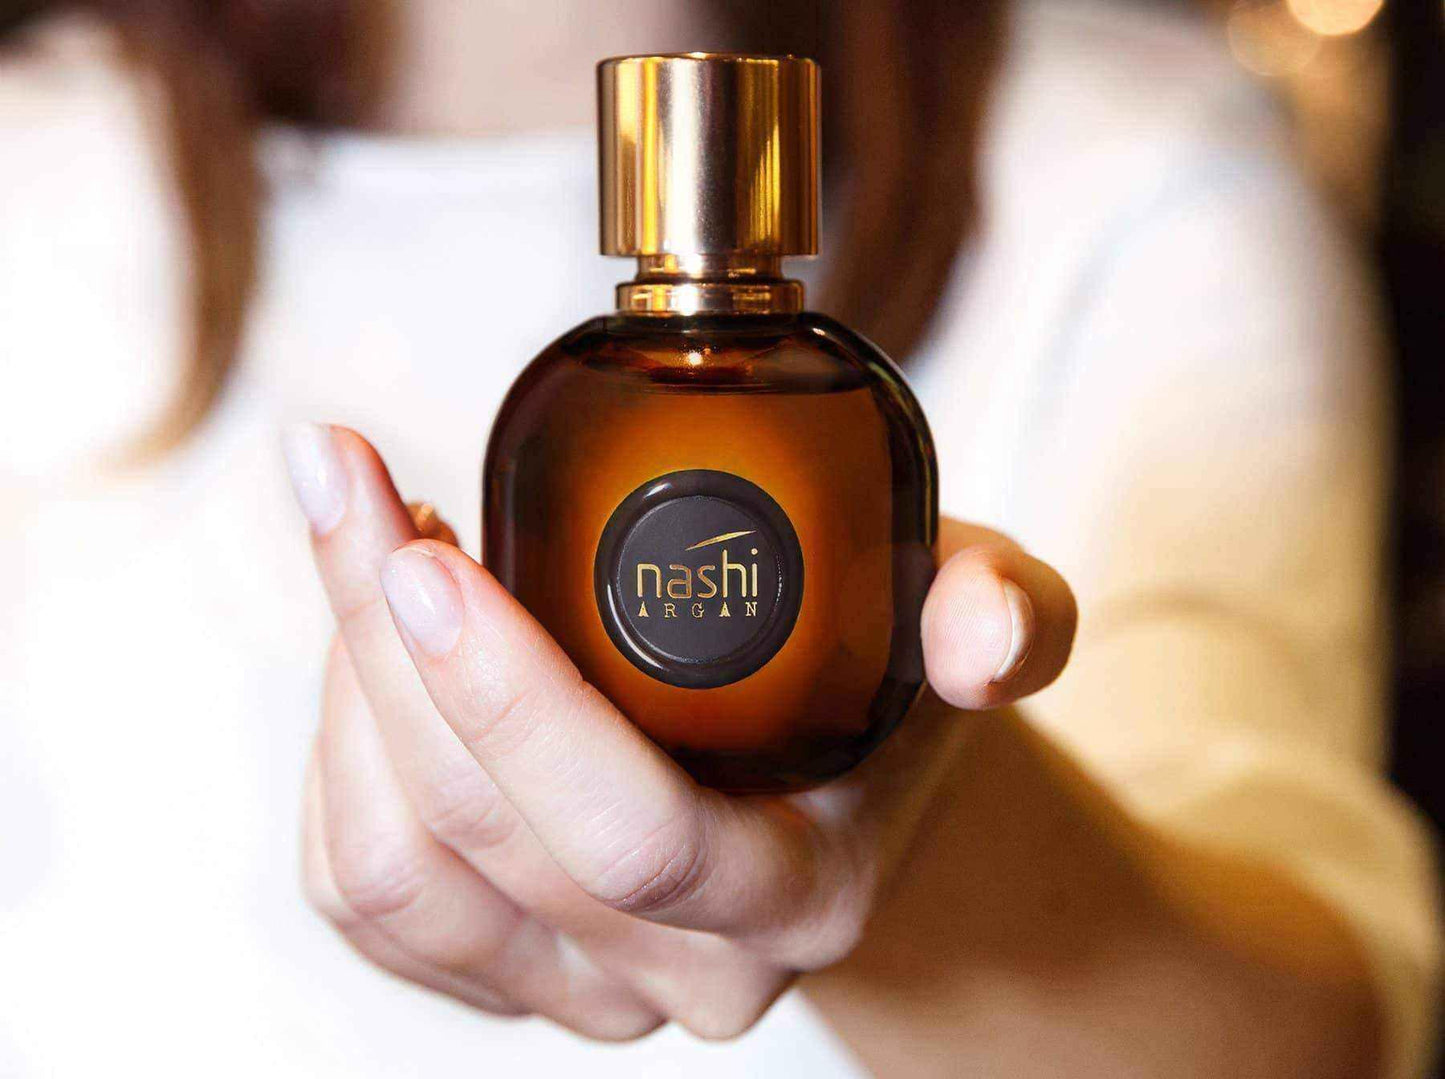 Nashi Argan L 'Essenza Eau de Parfum 50ml Spray UK